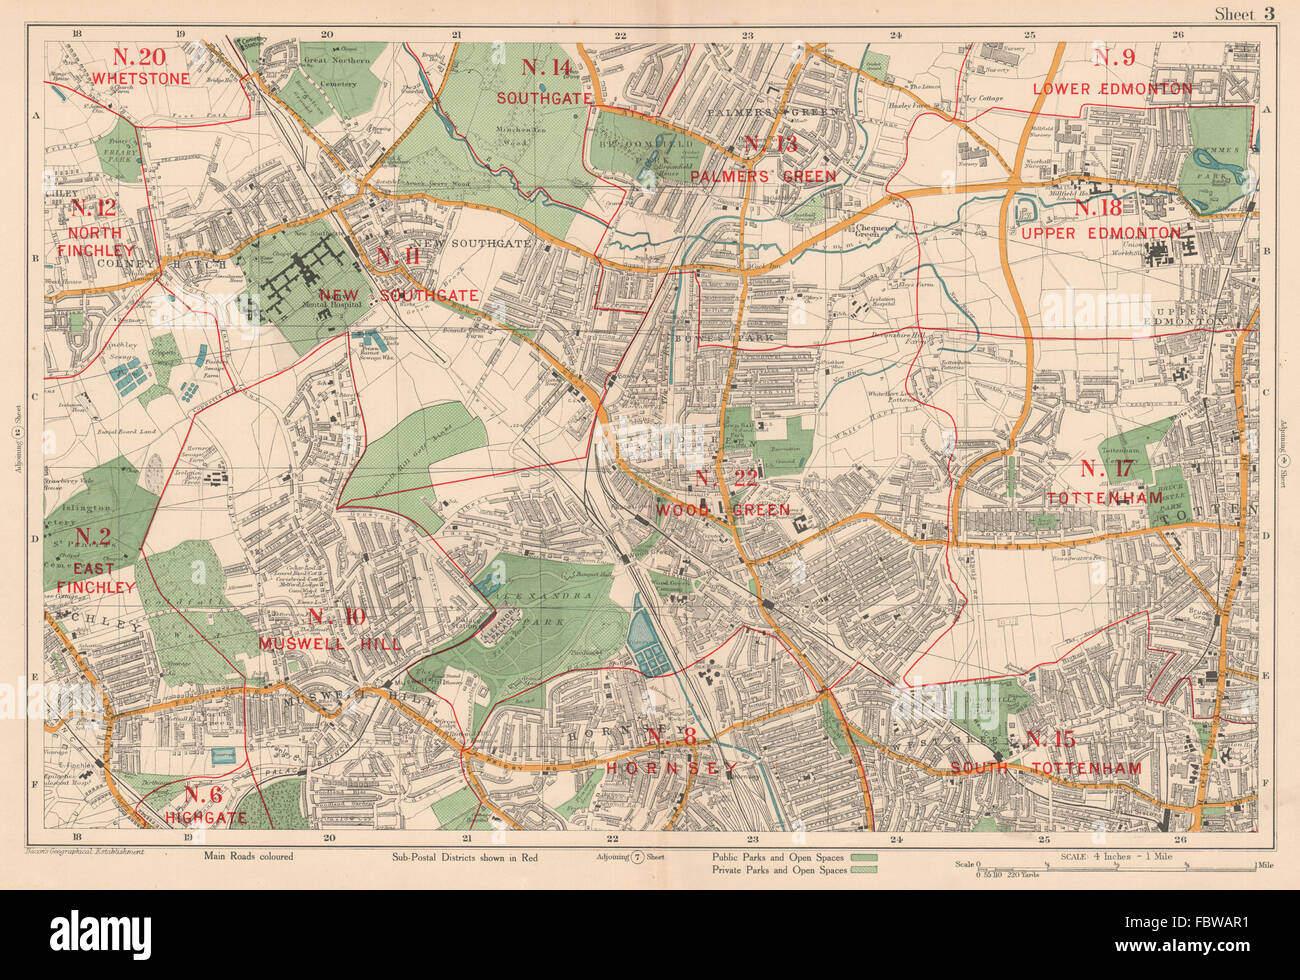 N LONDON Hornsey Edmonton Muswell Hill Southgate Tottenham. BACON, 1927 map Stock Photo